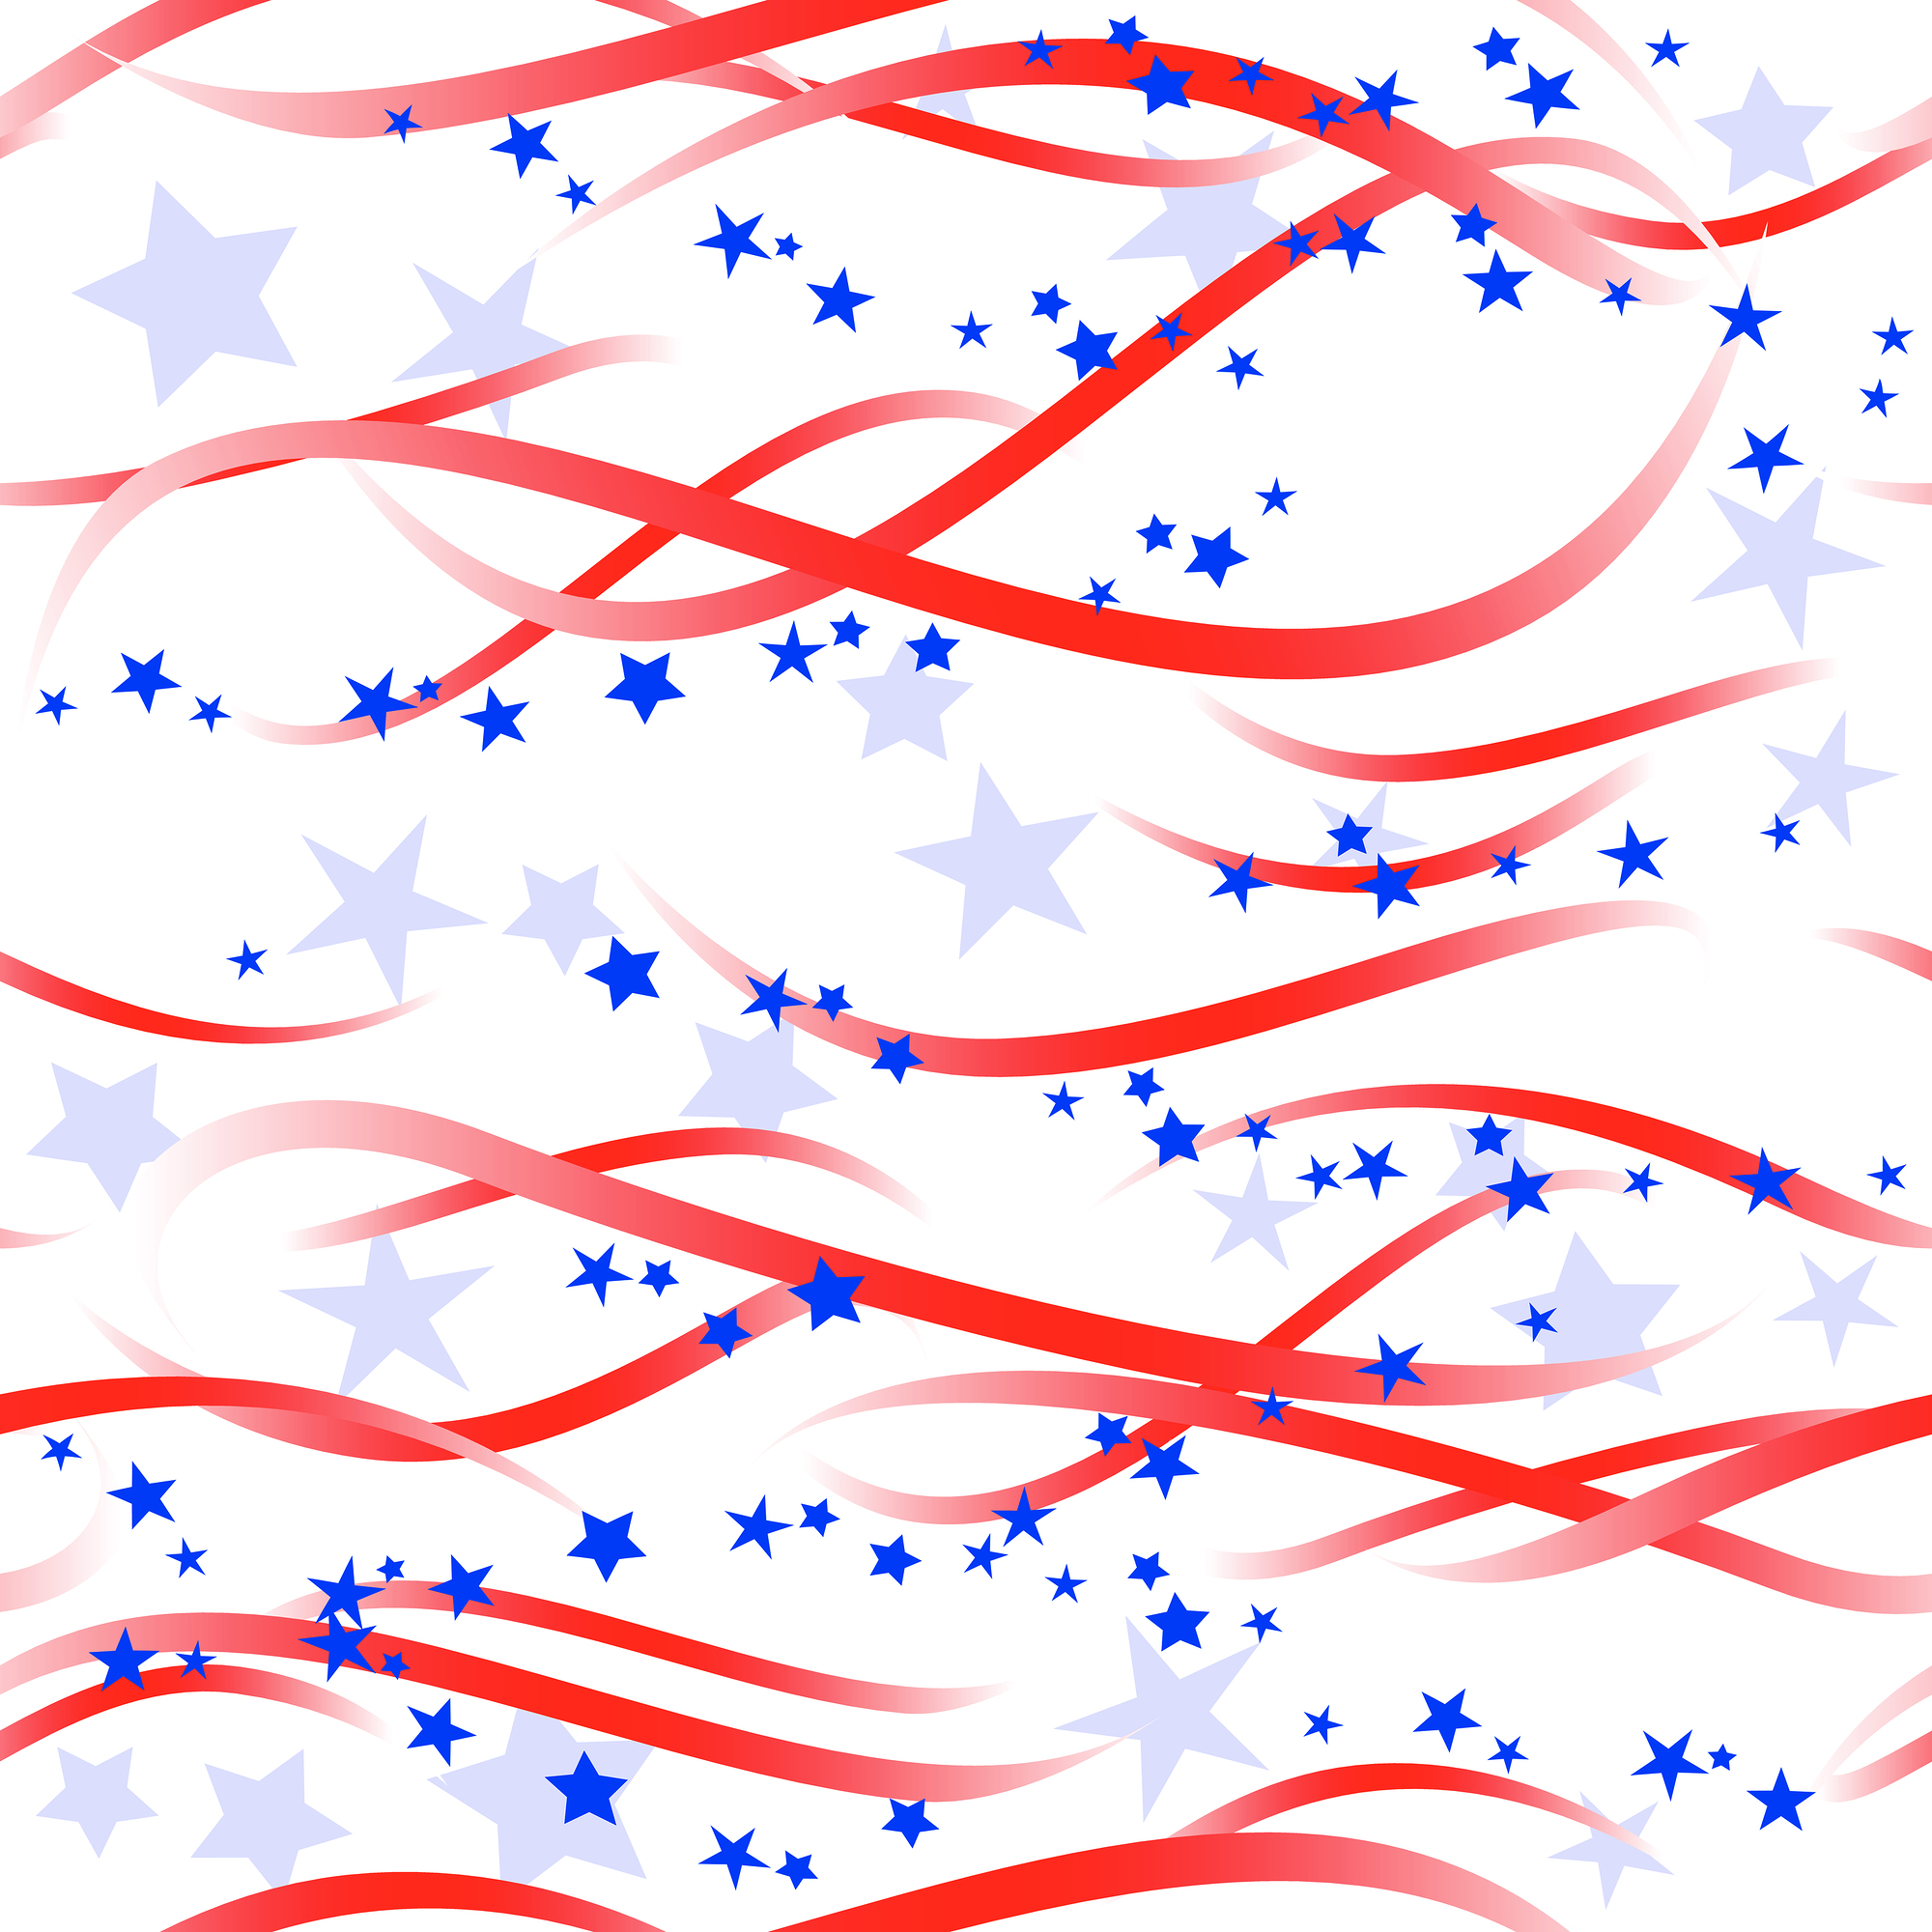 Patriotic vector swirls and stars seamless background